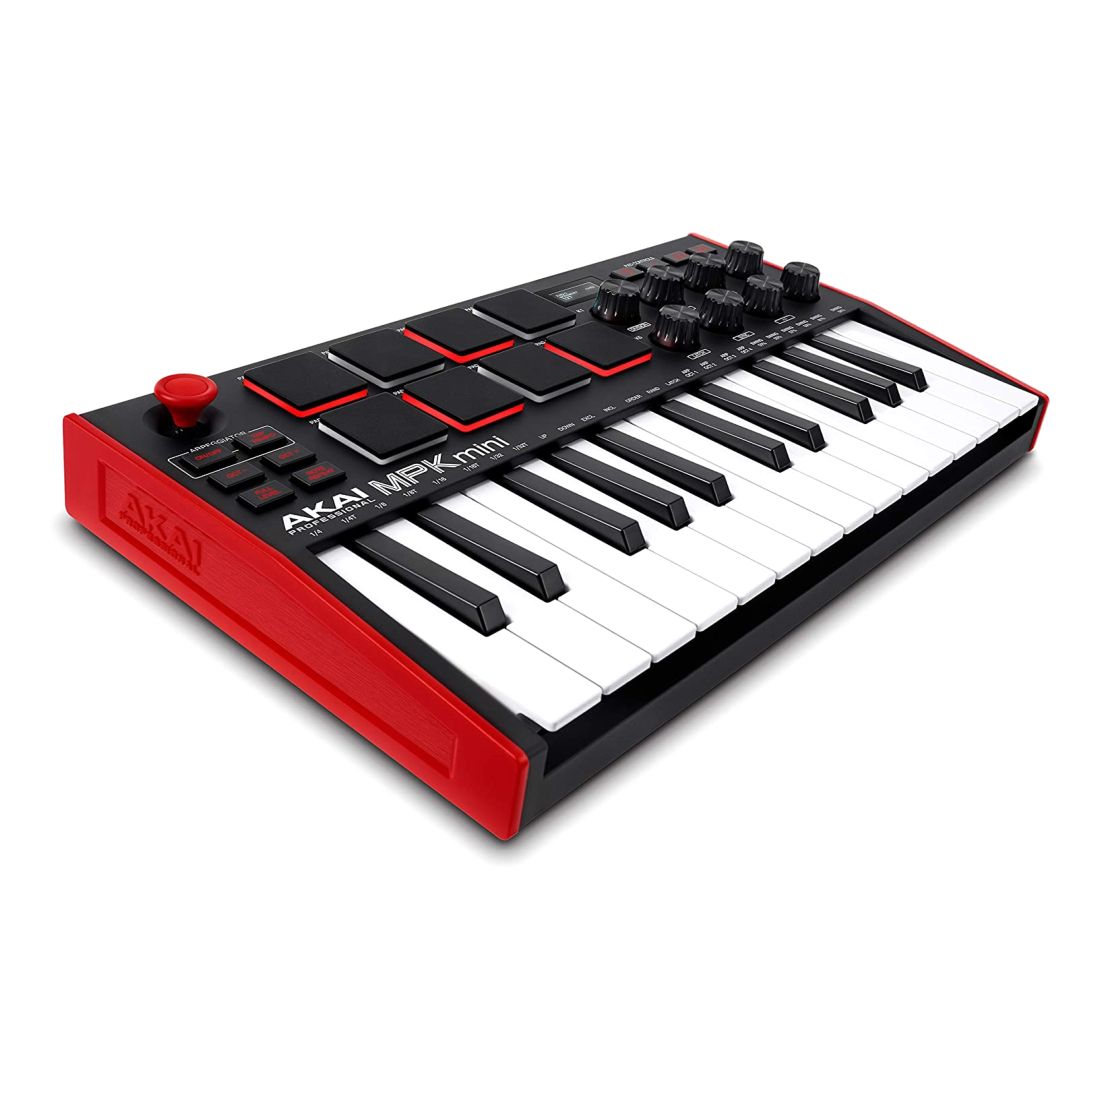 MIDI-контроллер клавиатуры Akai MPK3 Mini MK3 25-клавишный, черный midi клавиатура 25 клавиш akai mpk mini mk3 red